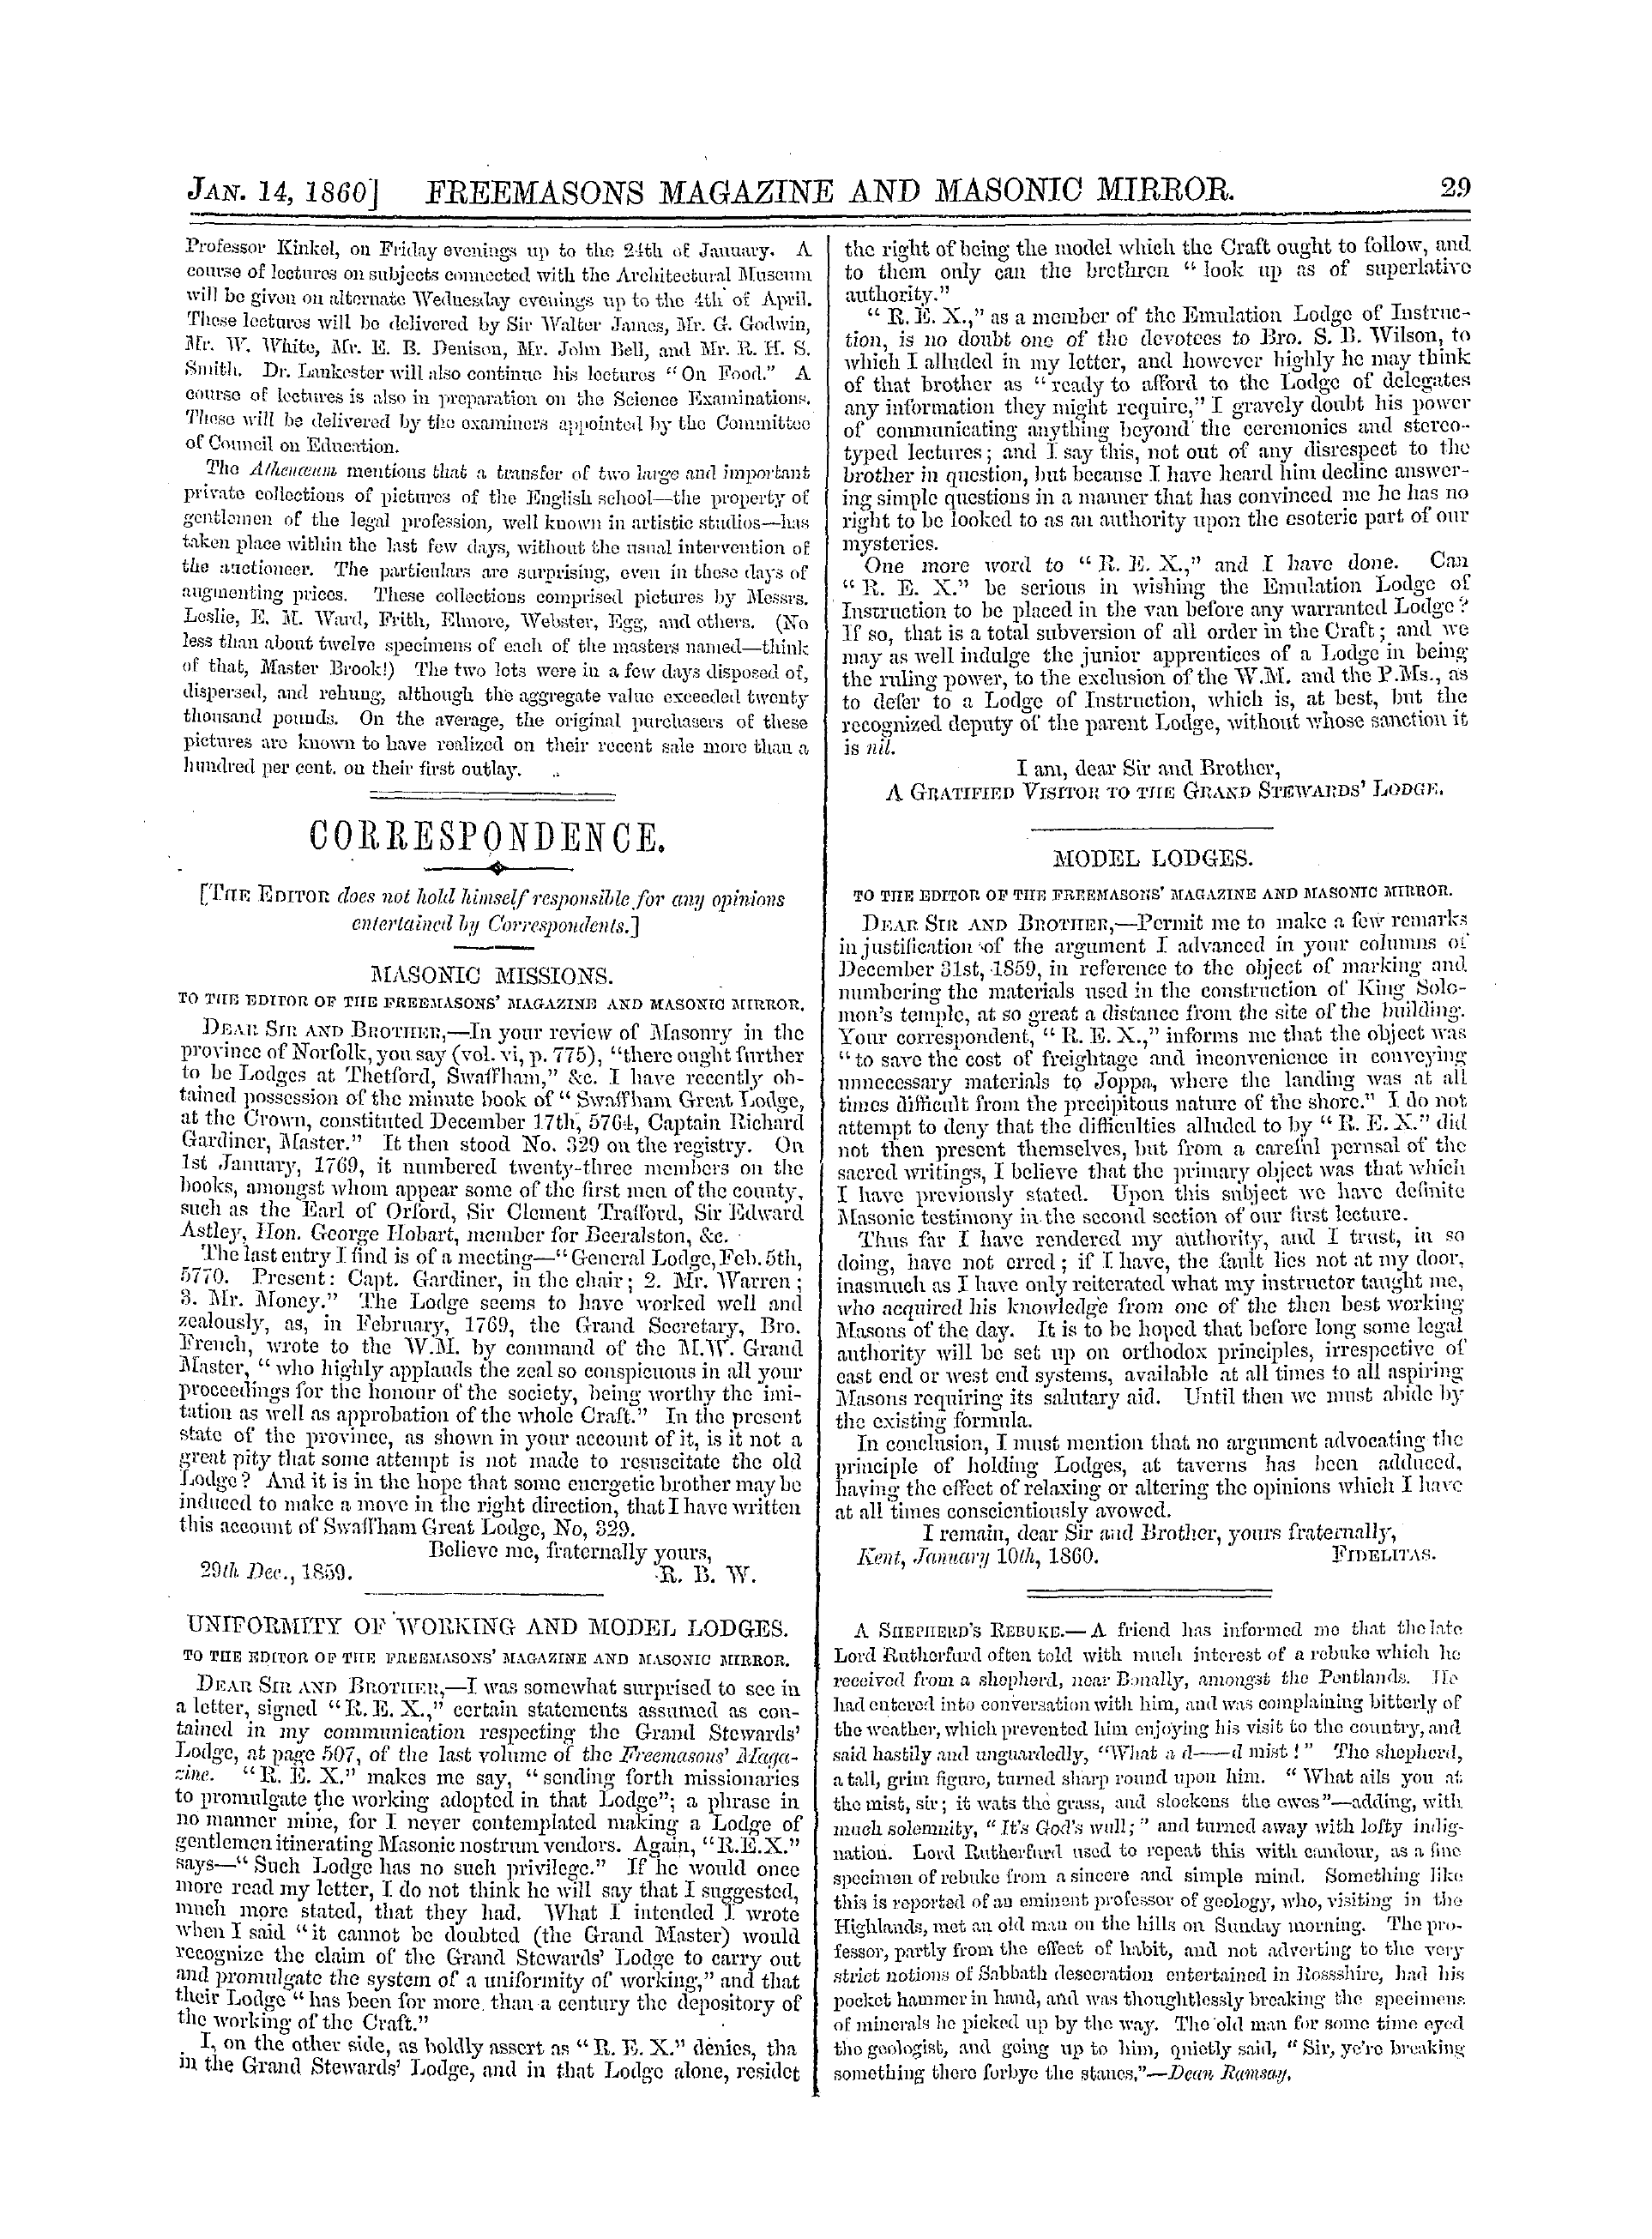 The Freemasons' Monthly Magazine: 1860-01-14 - Uniformity Of Working And Model Lodges.